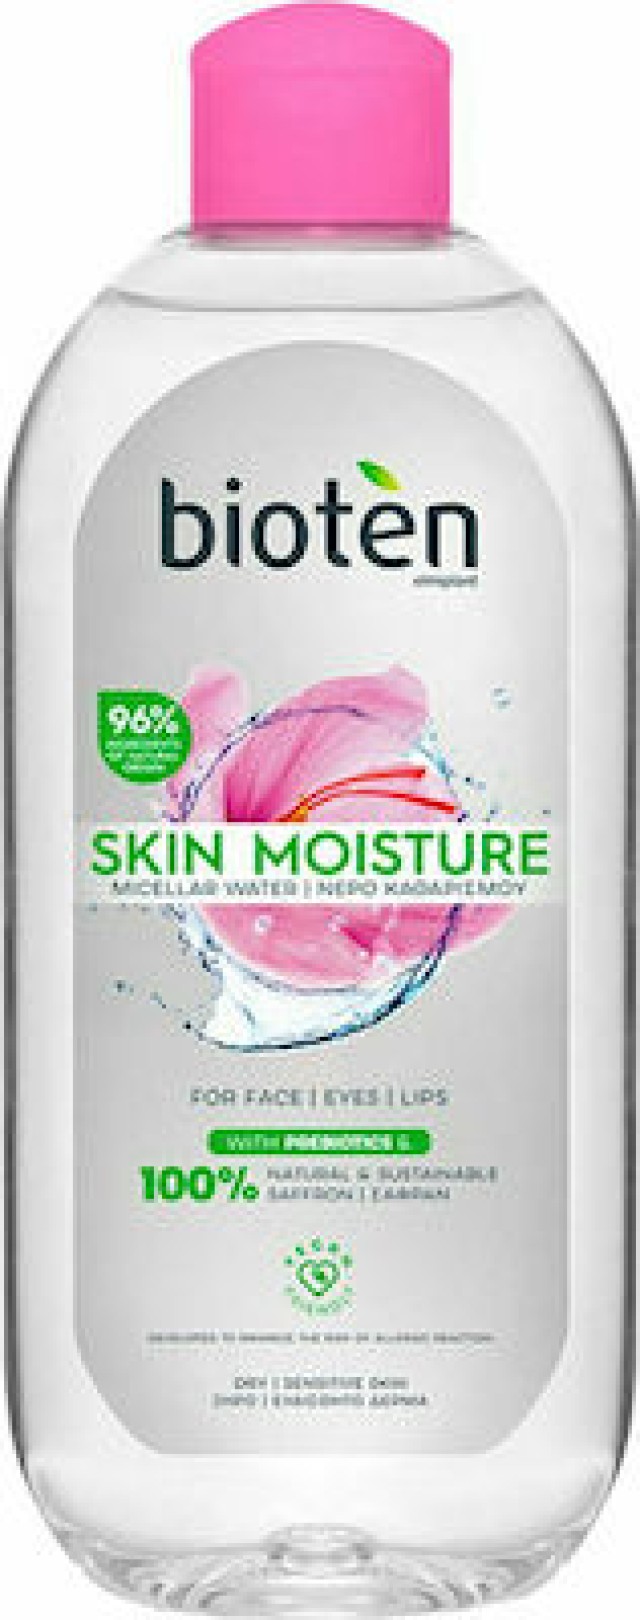 Bioten Skin Moisture Micellar Water Νερό Καθαρισμού Προσώπου για Ξηρή/Ευαίσθητη Επιδερμίδα, 400ml